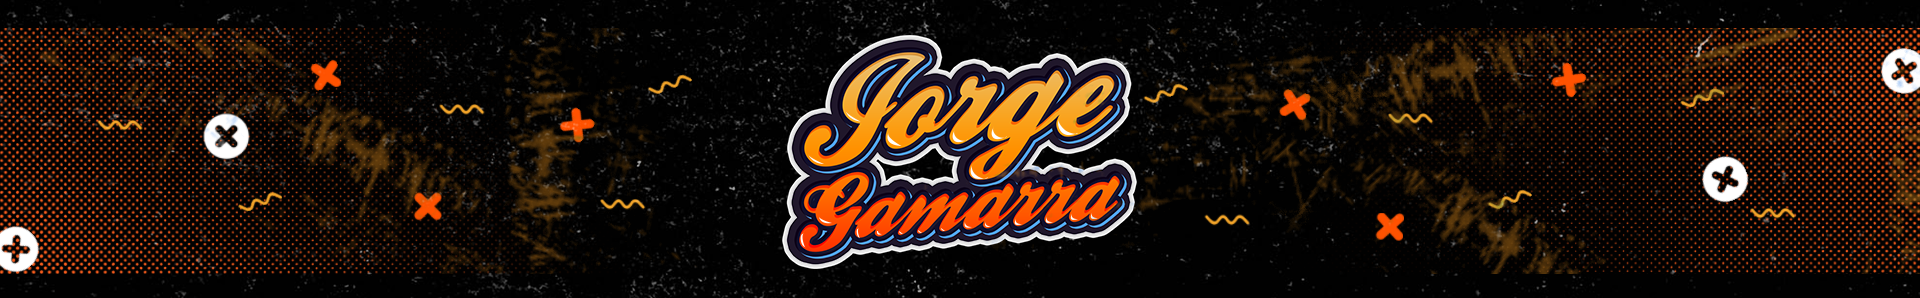 Jorge Luis Gamarra Miche's profile banner